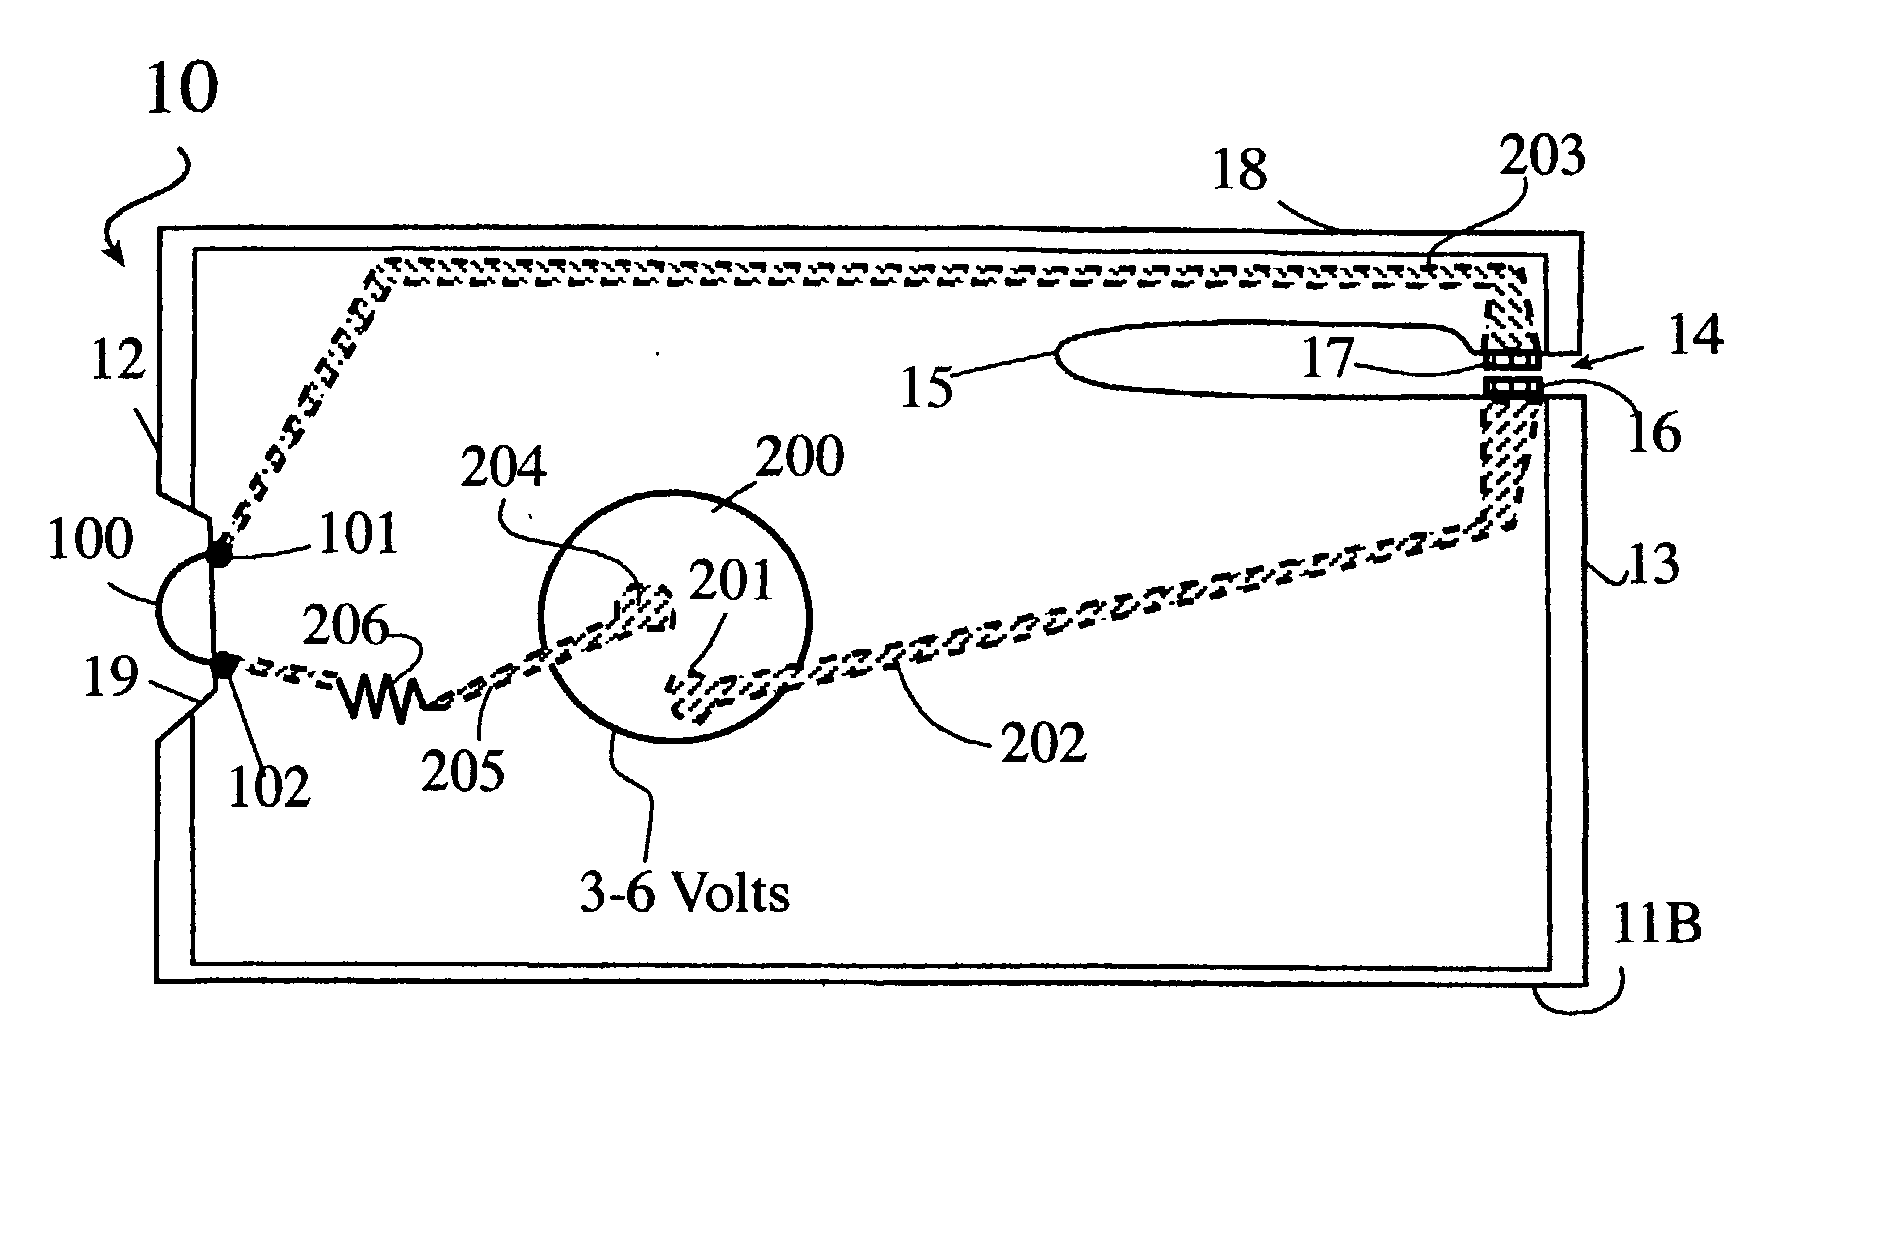 Flat illuminator with flexible integral switching arm